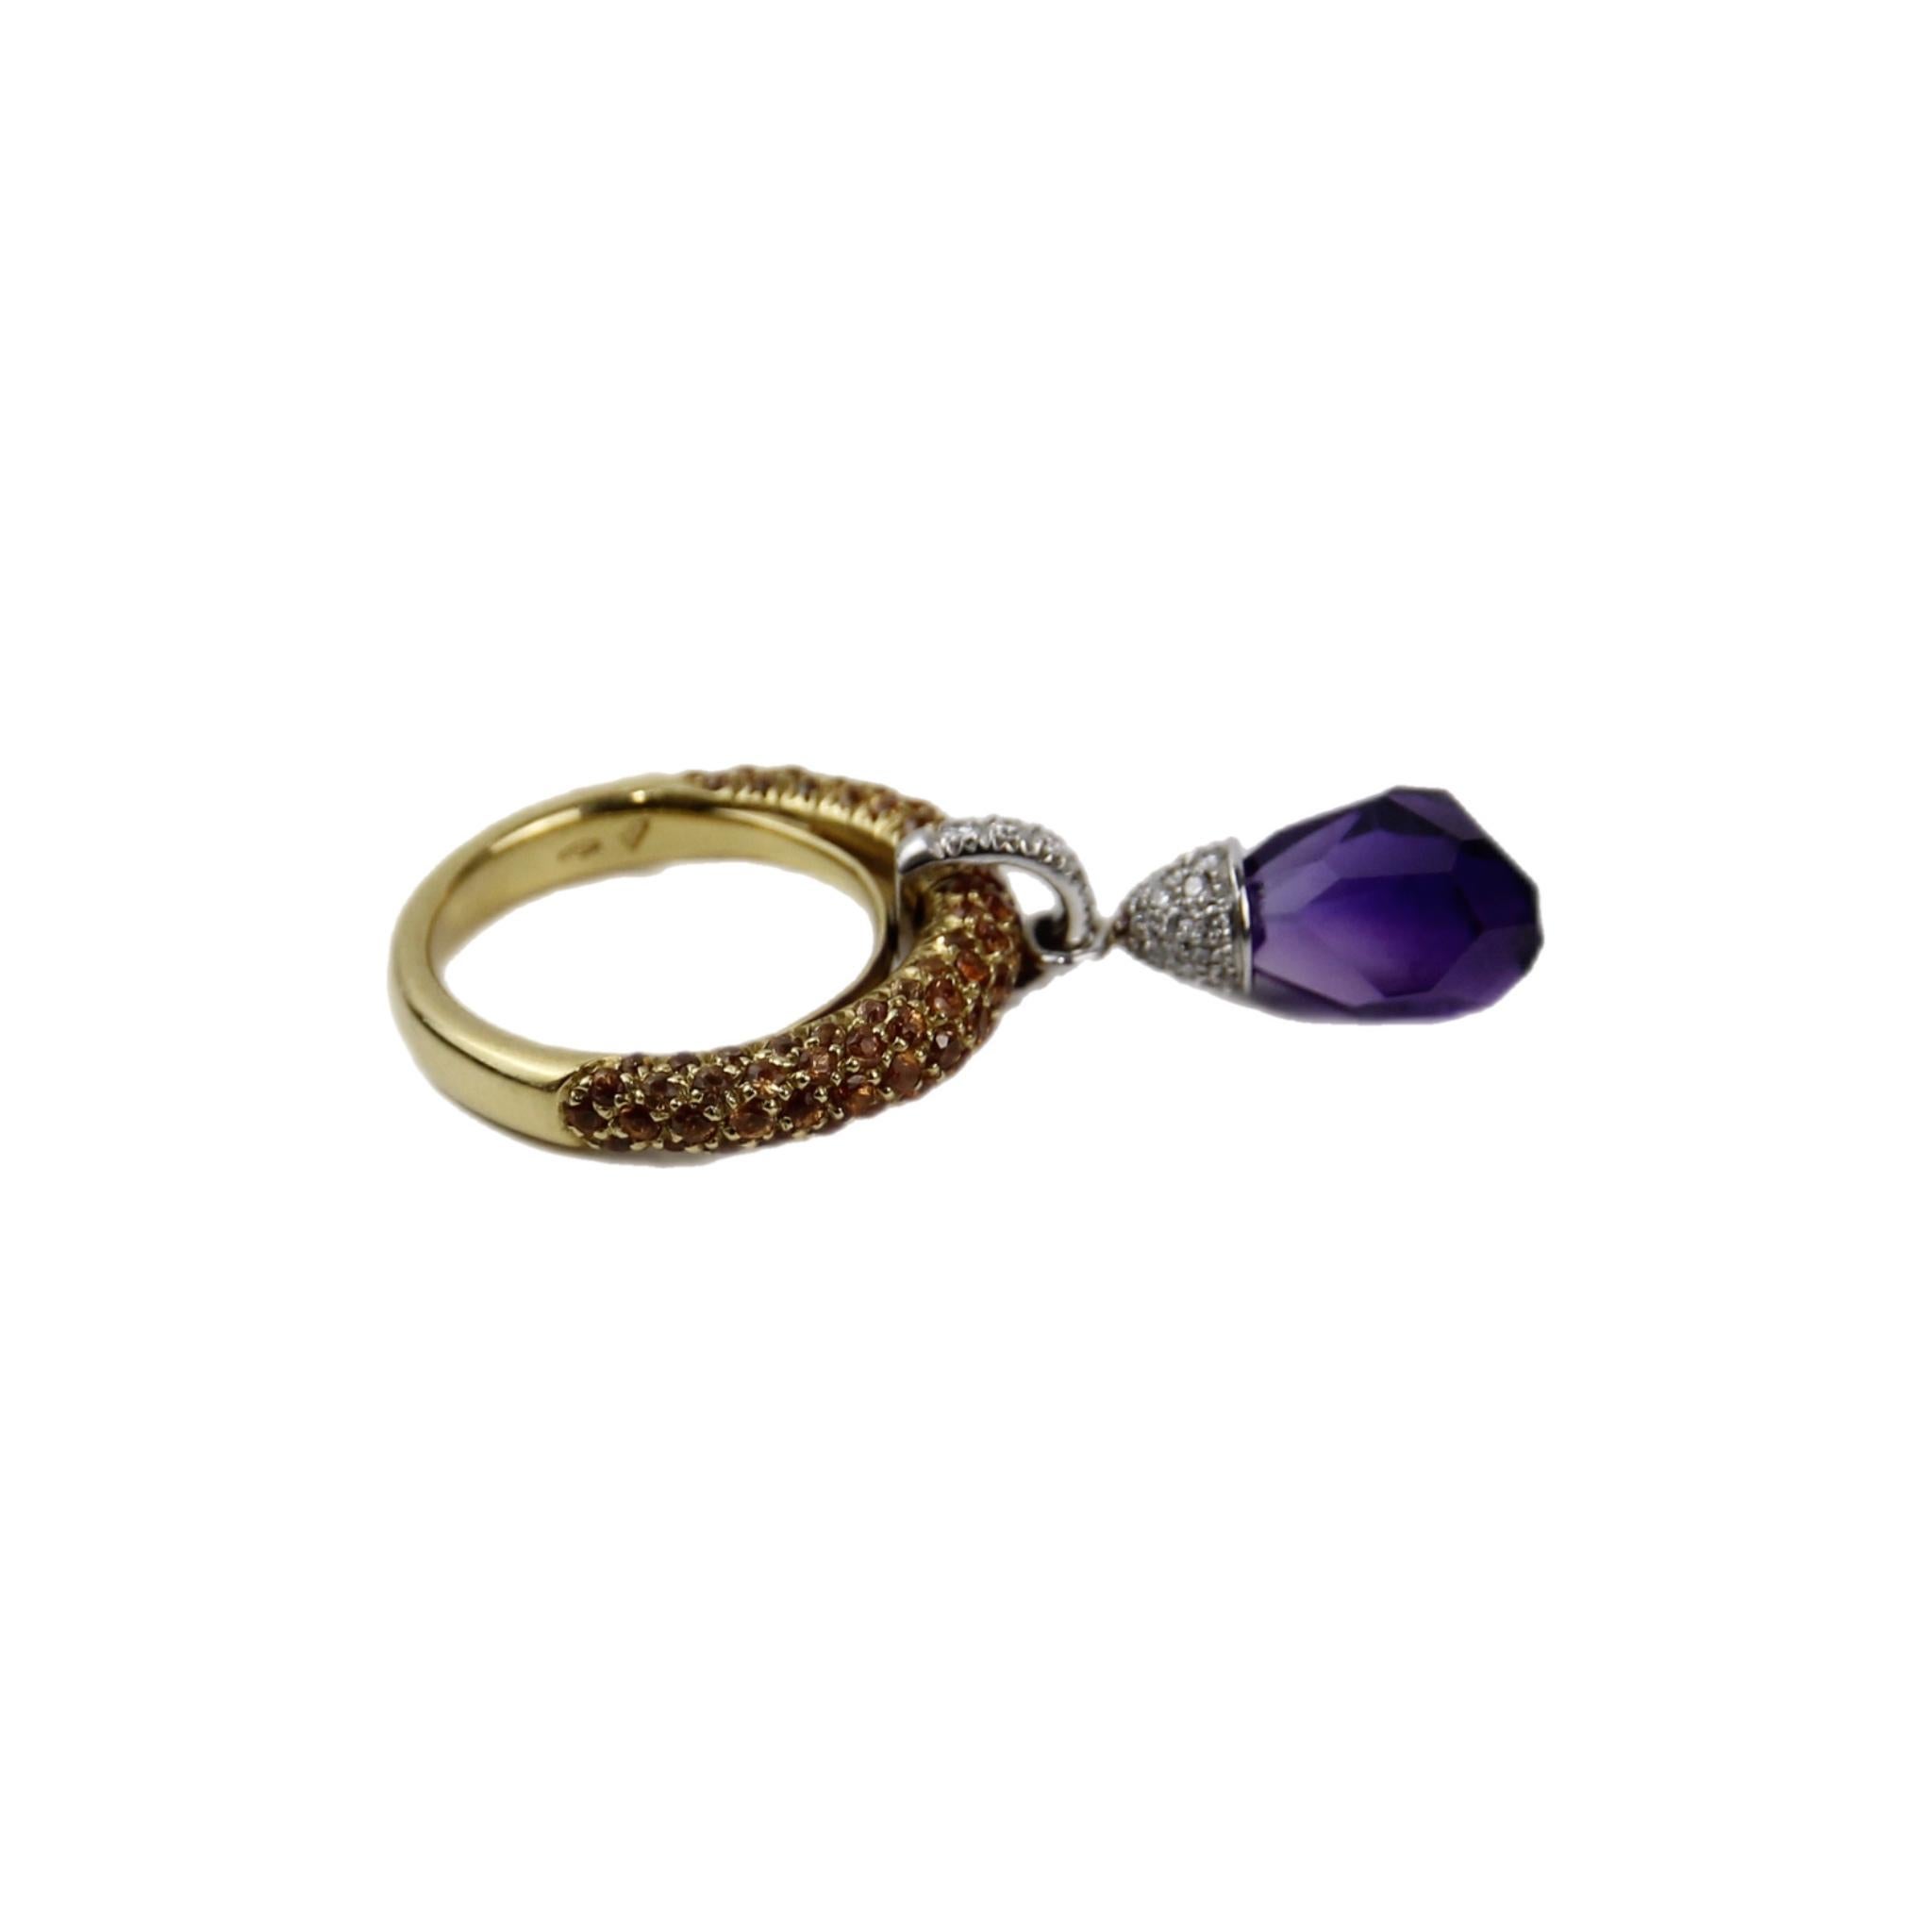 Diamond: 0.31ctw
Sapphire: 1.84ctw
Ring Size: 7
SKU: BLU01240
Model number: 18555RGZ4AM
Retail price: $9,100.00